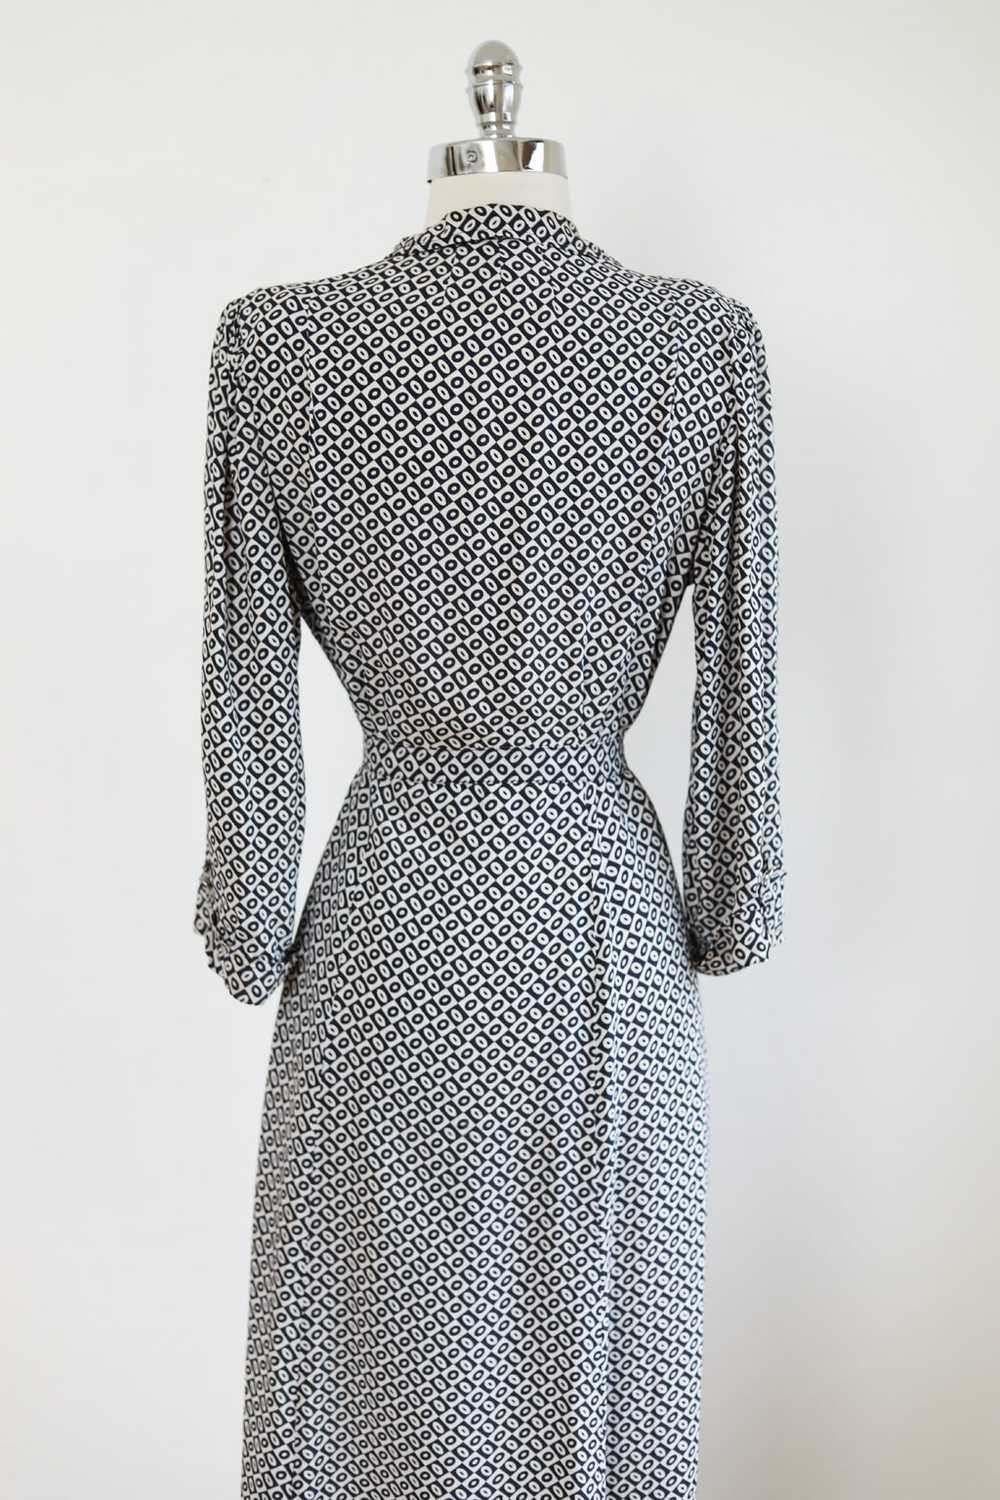 Vintage 1940s Cold Rayon Print Dress - VOLUP Blac… - image 9